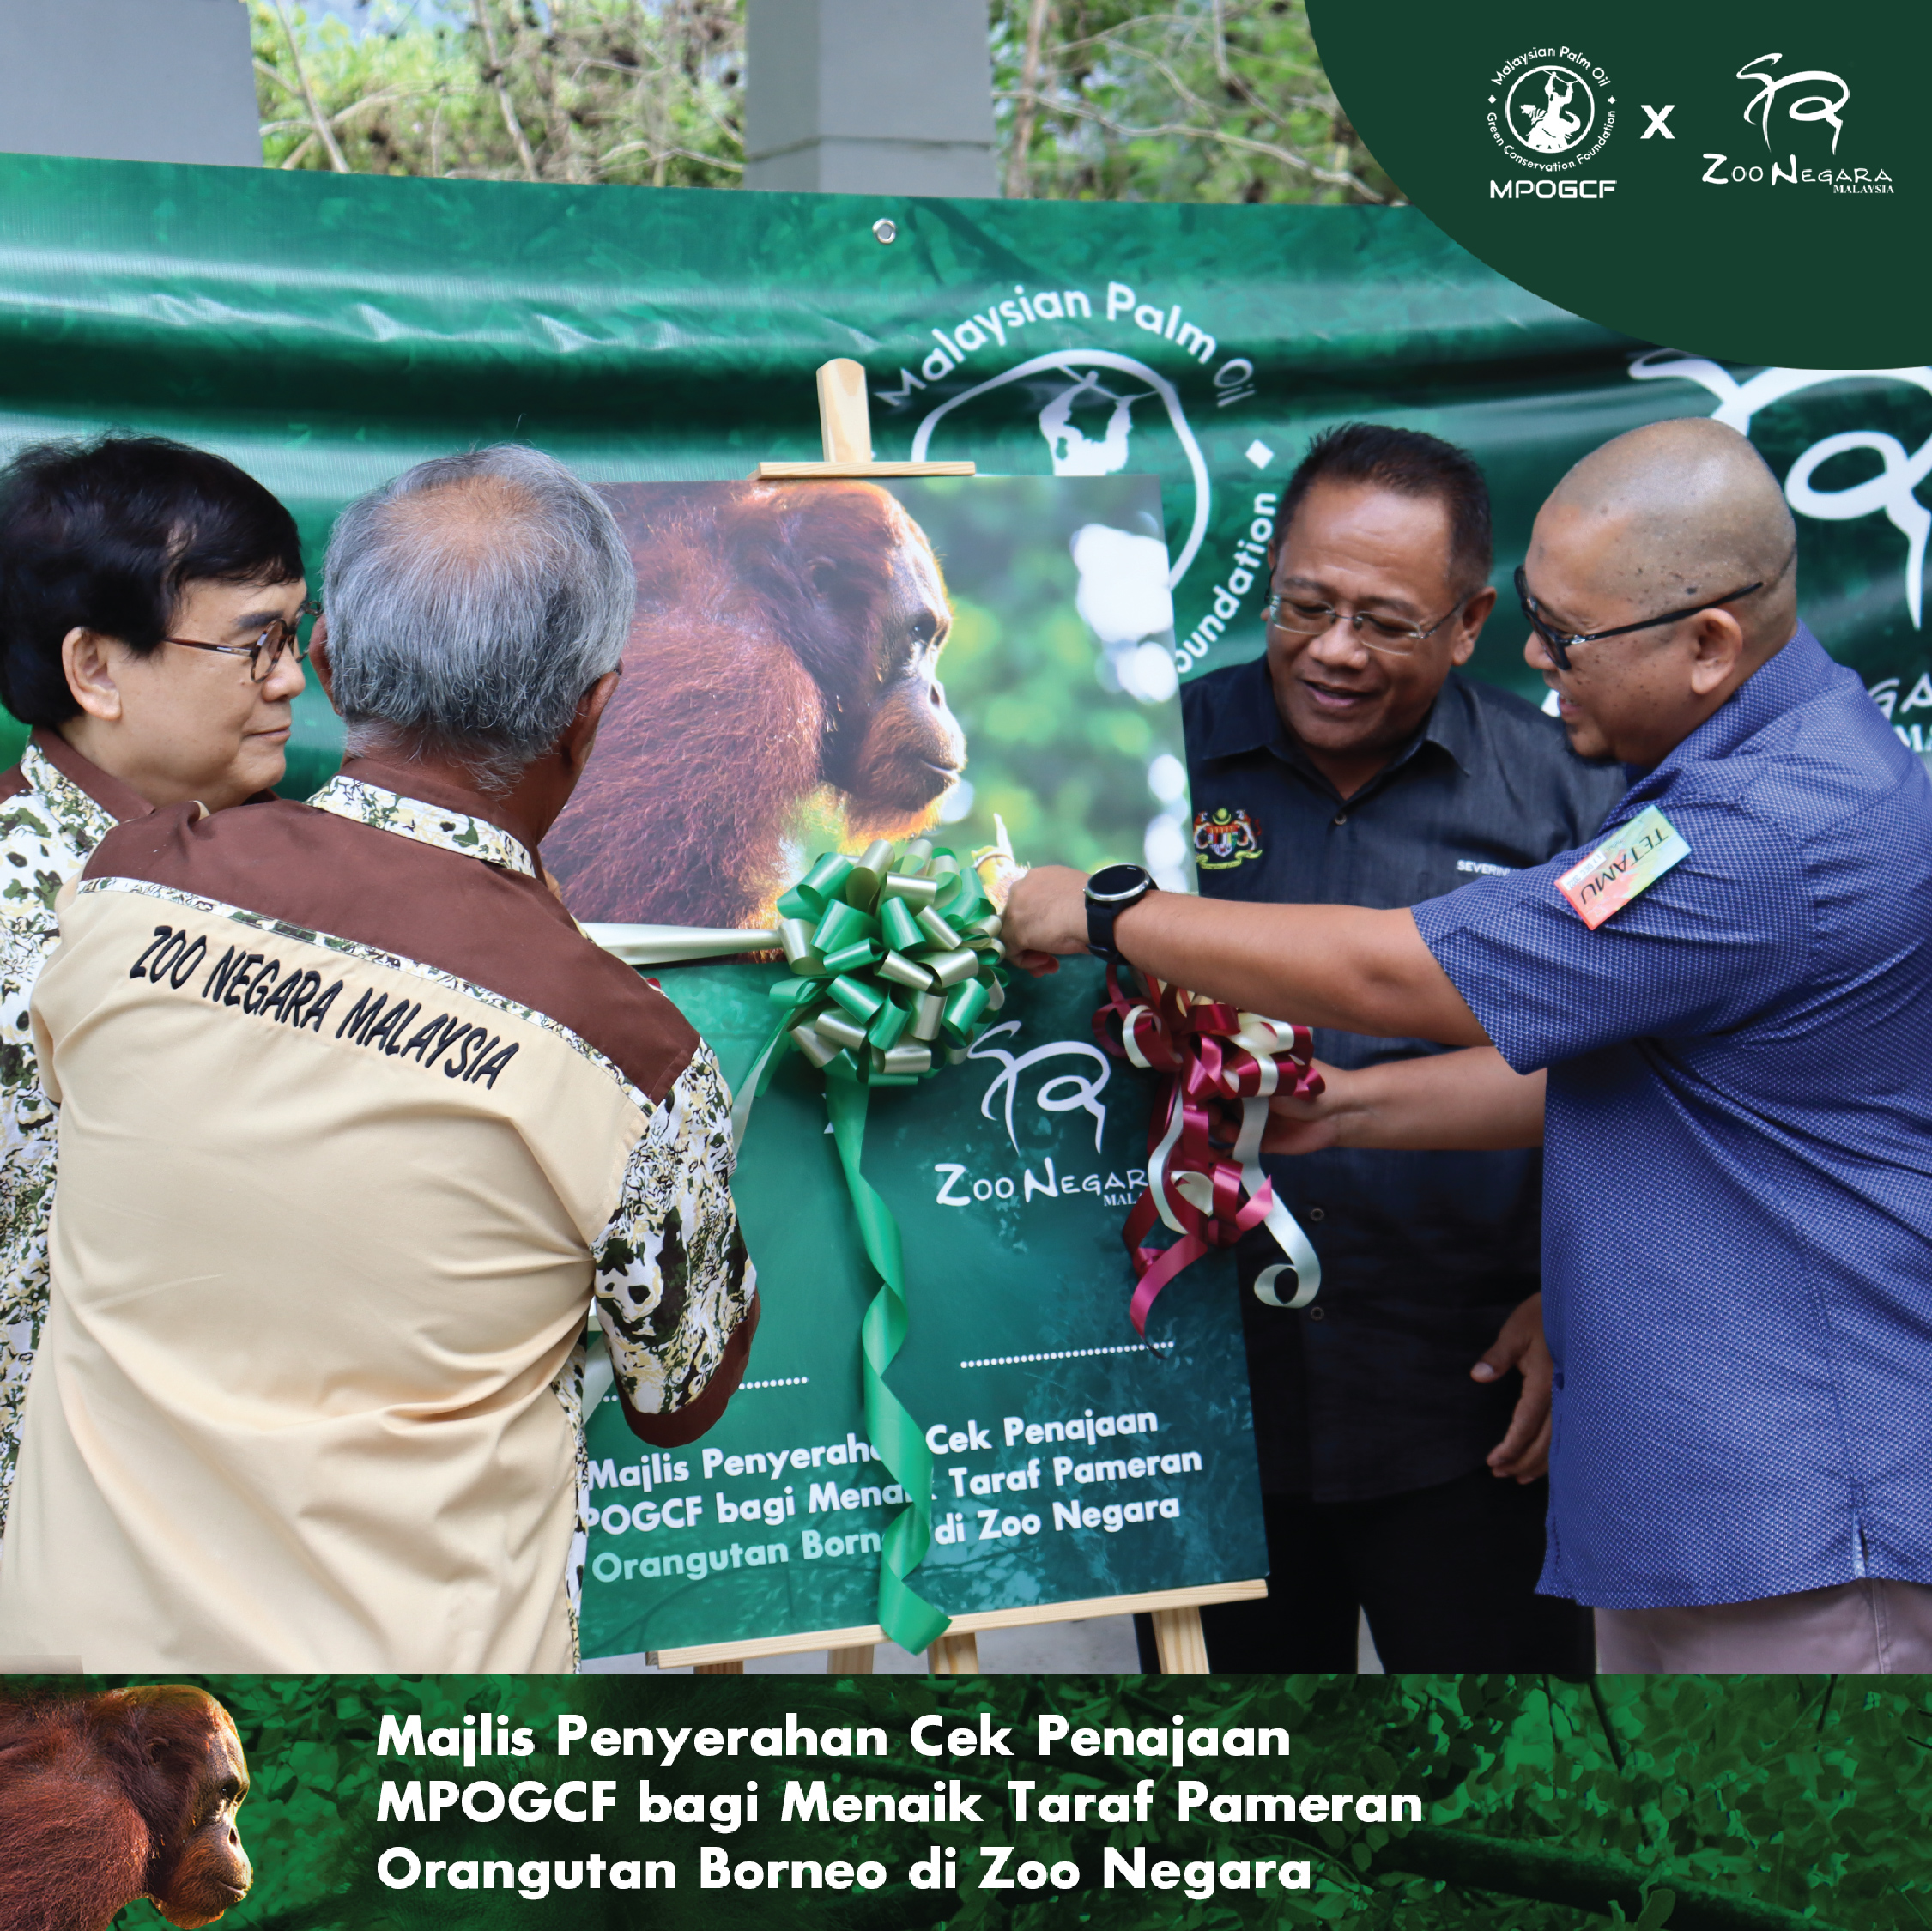 MPOGCF sponsors RM 1.1m to upgrade Orang Utan showcase at Zoo Negara